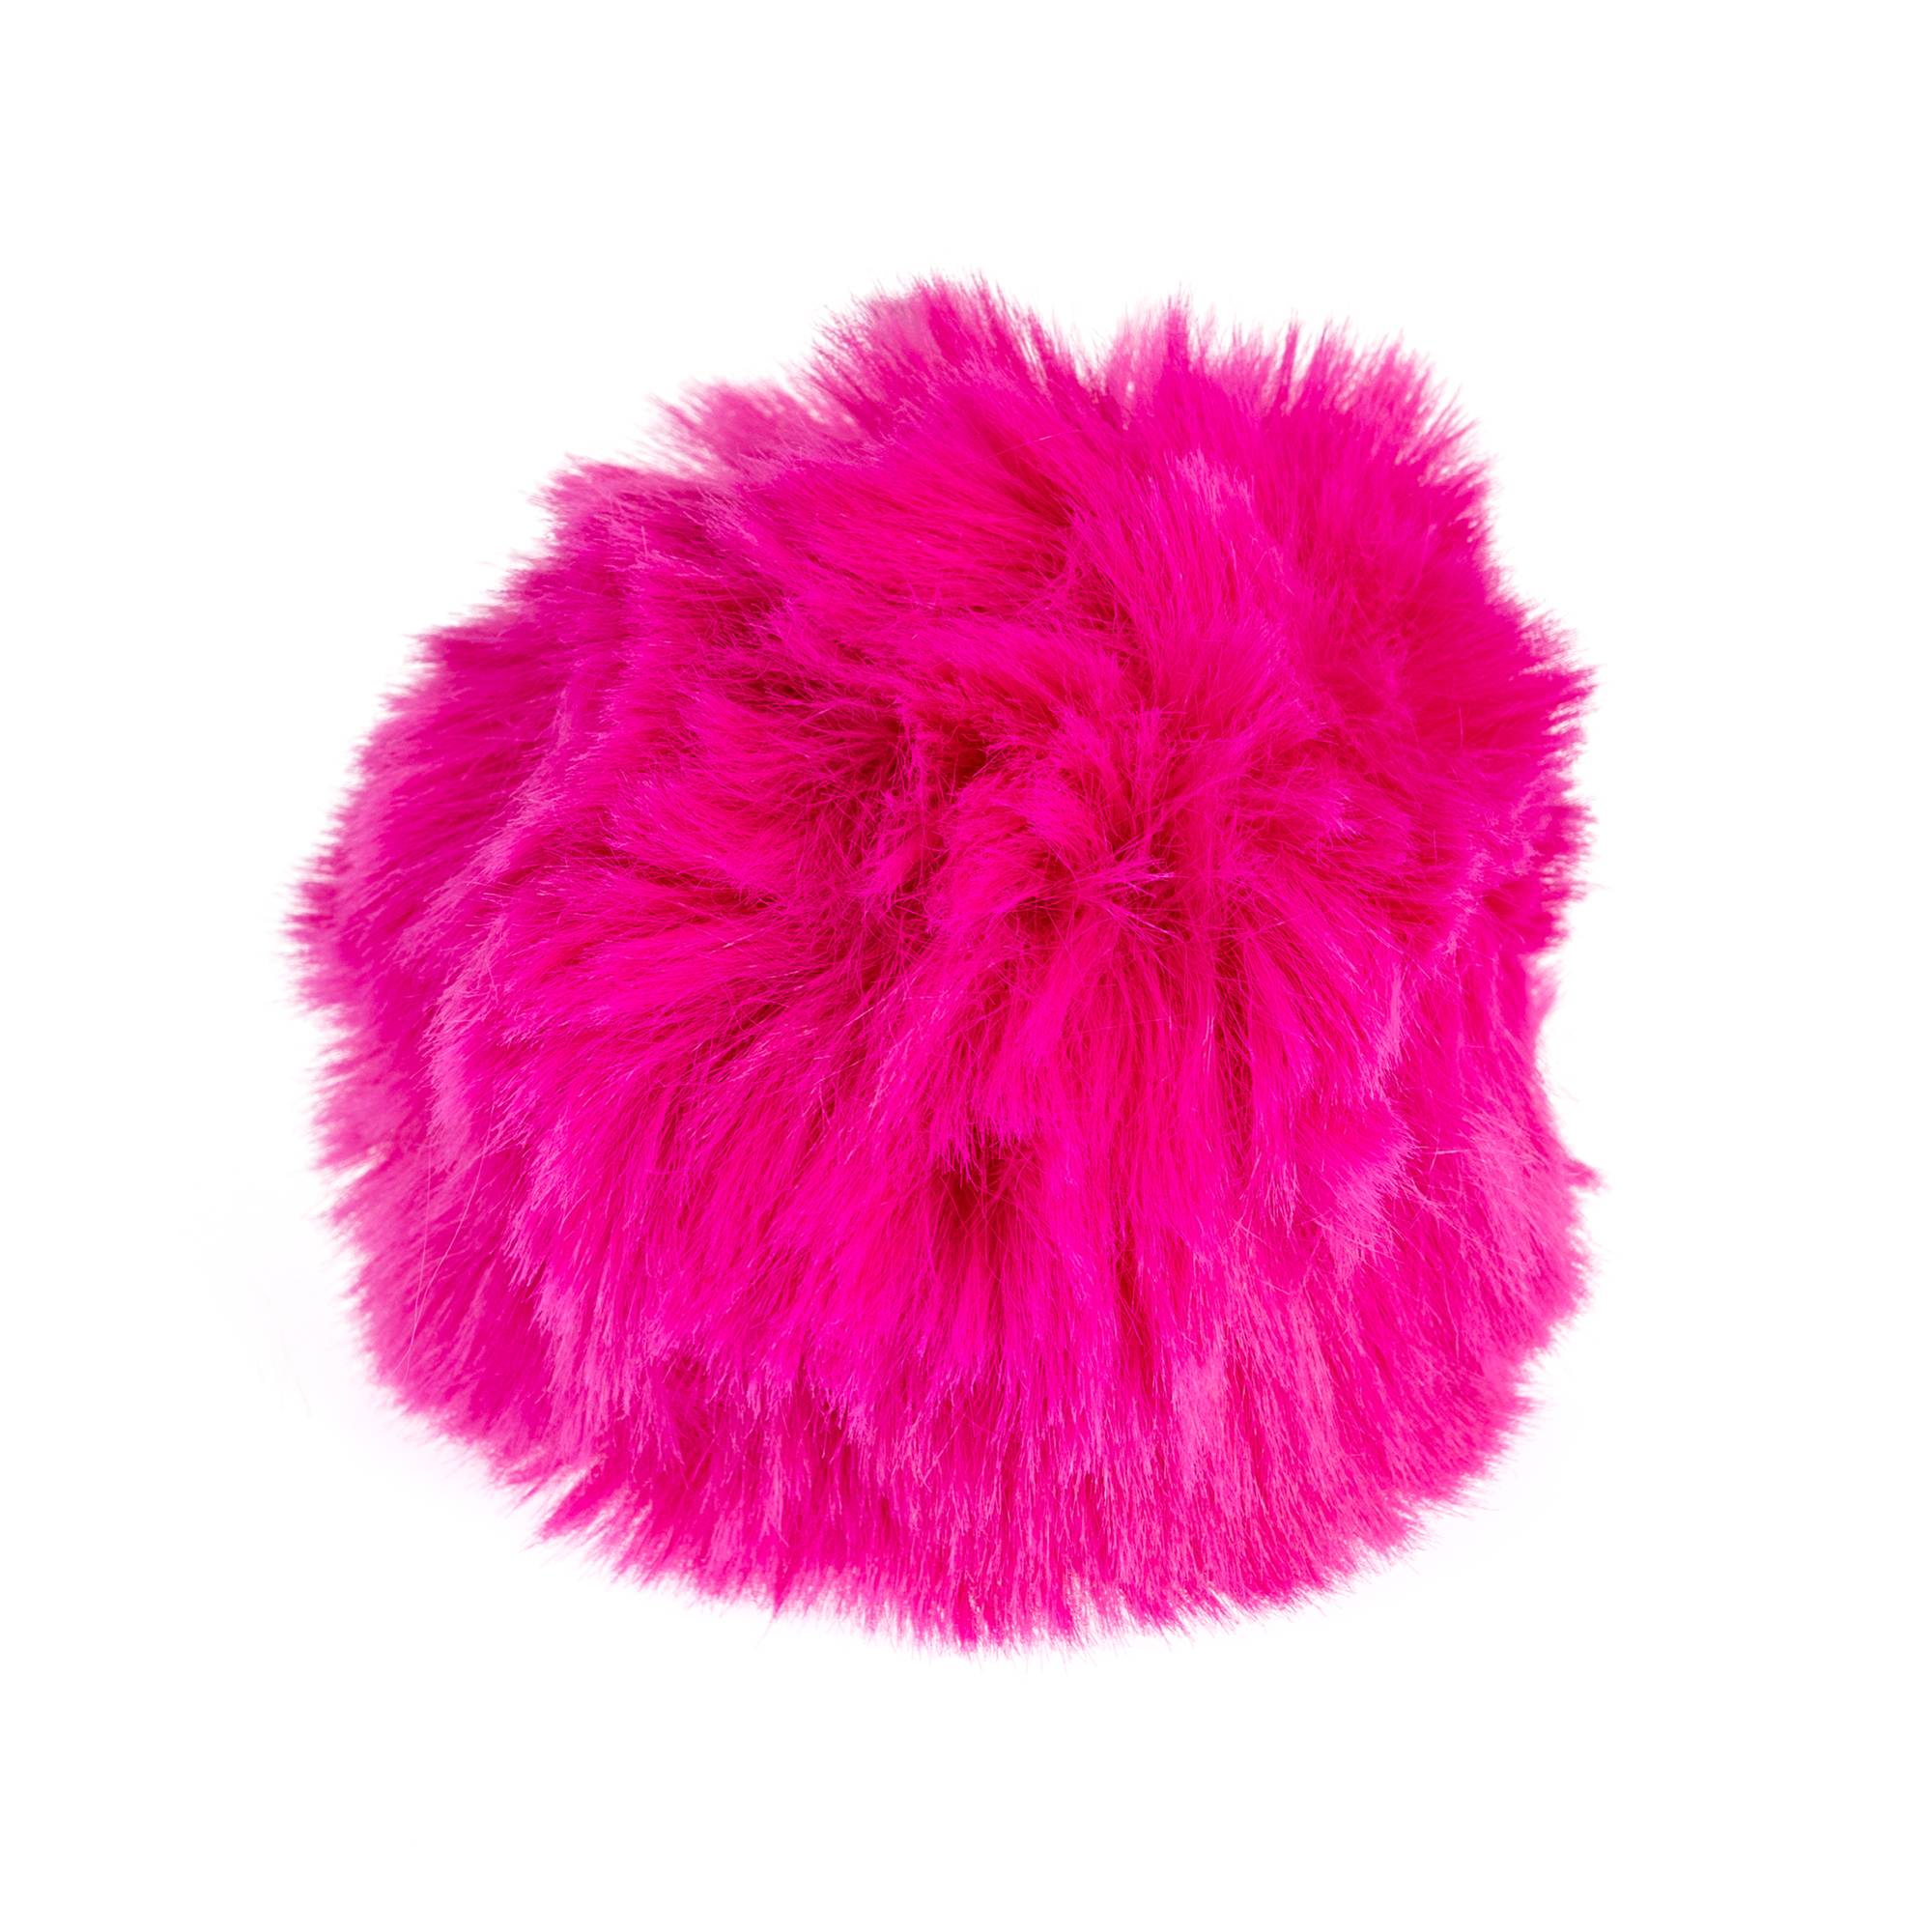 Bright Pink Faux Fur Pom Pom 11cm | Hobbycraft